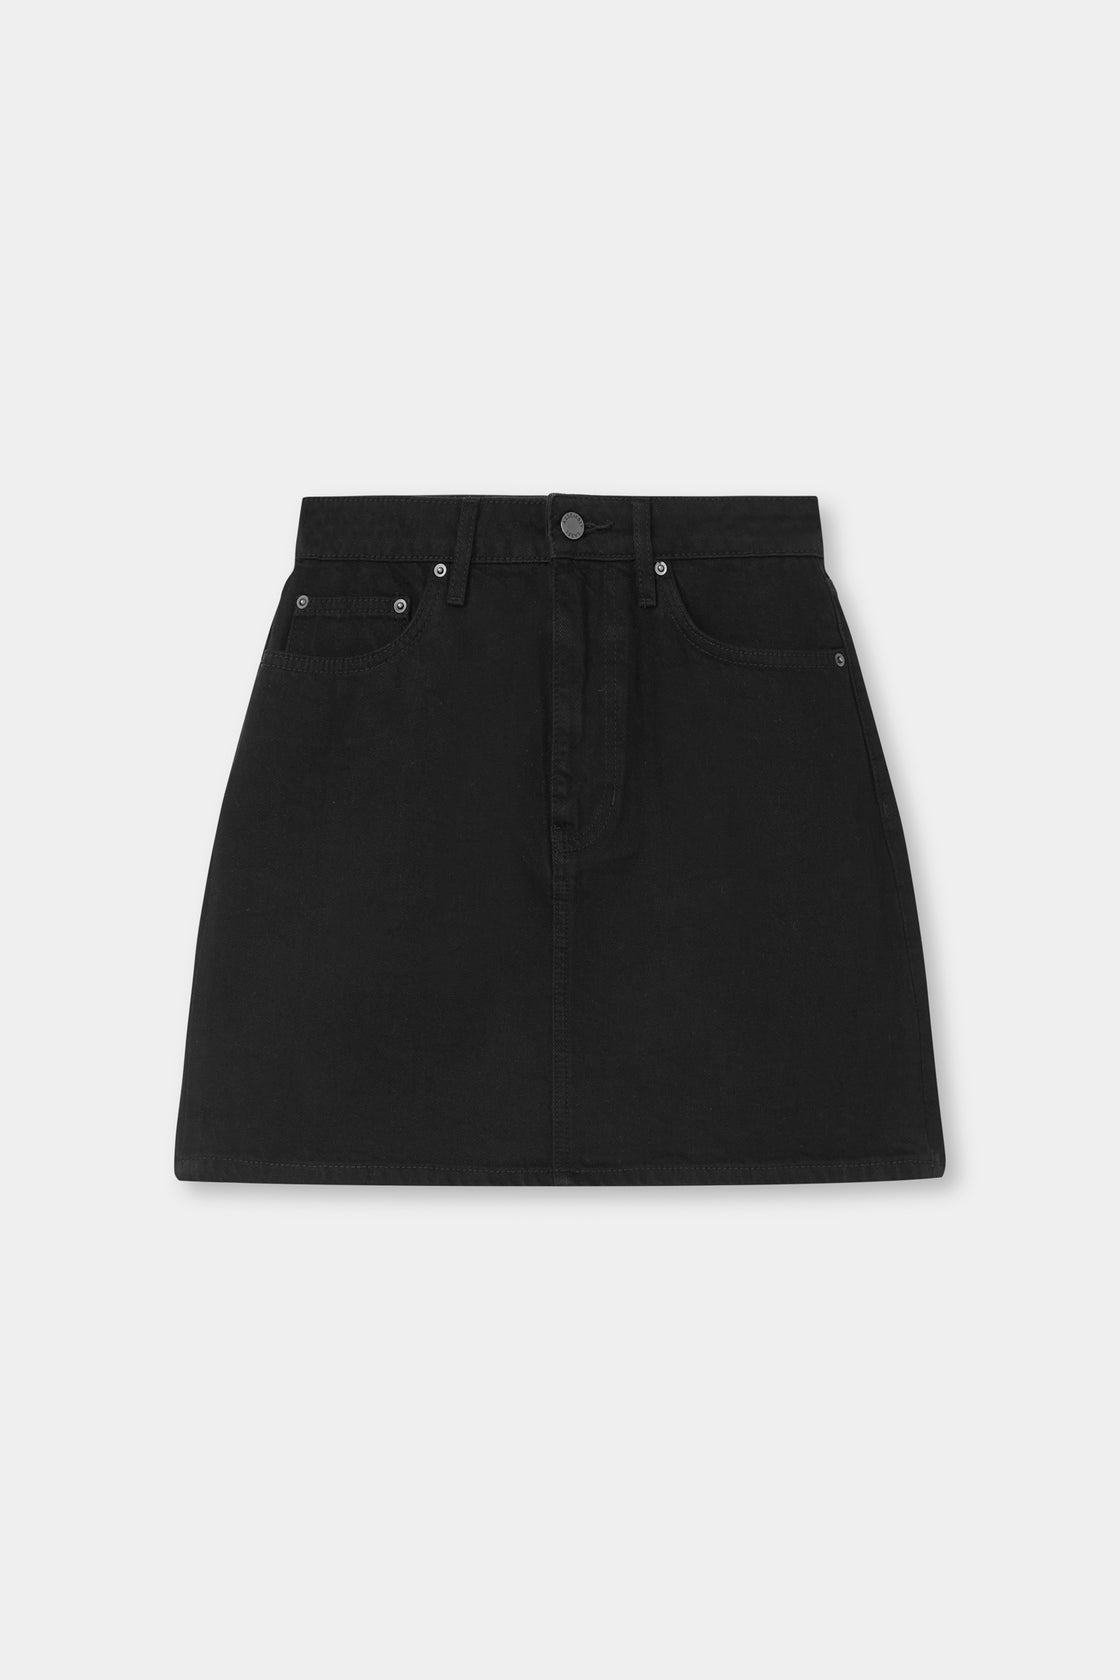 Denim Mini Skirt - Jet Black